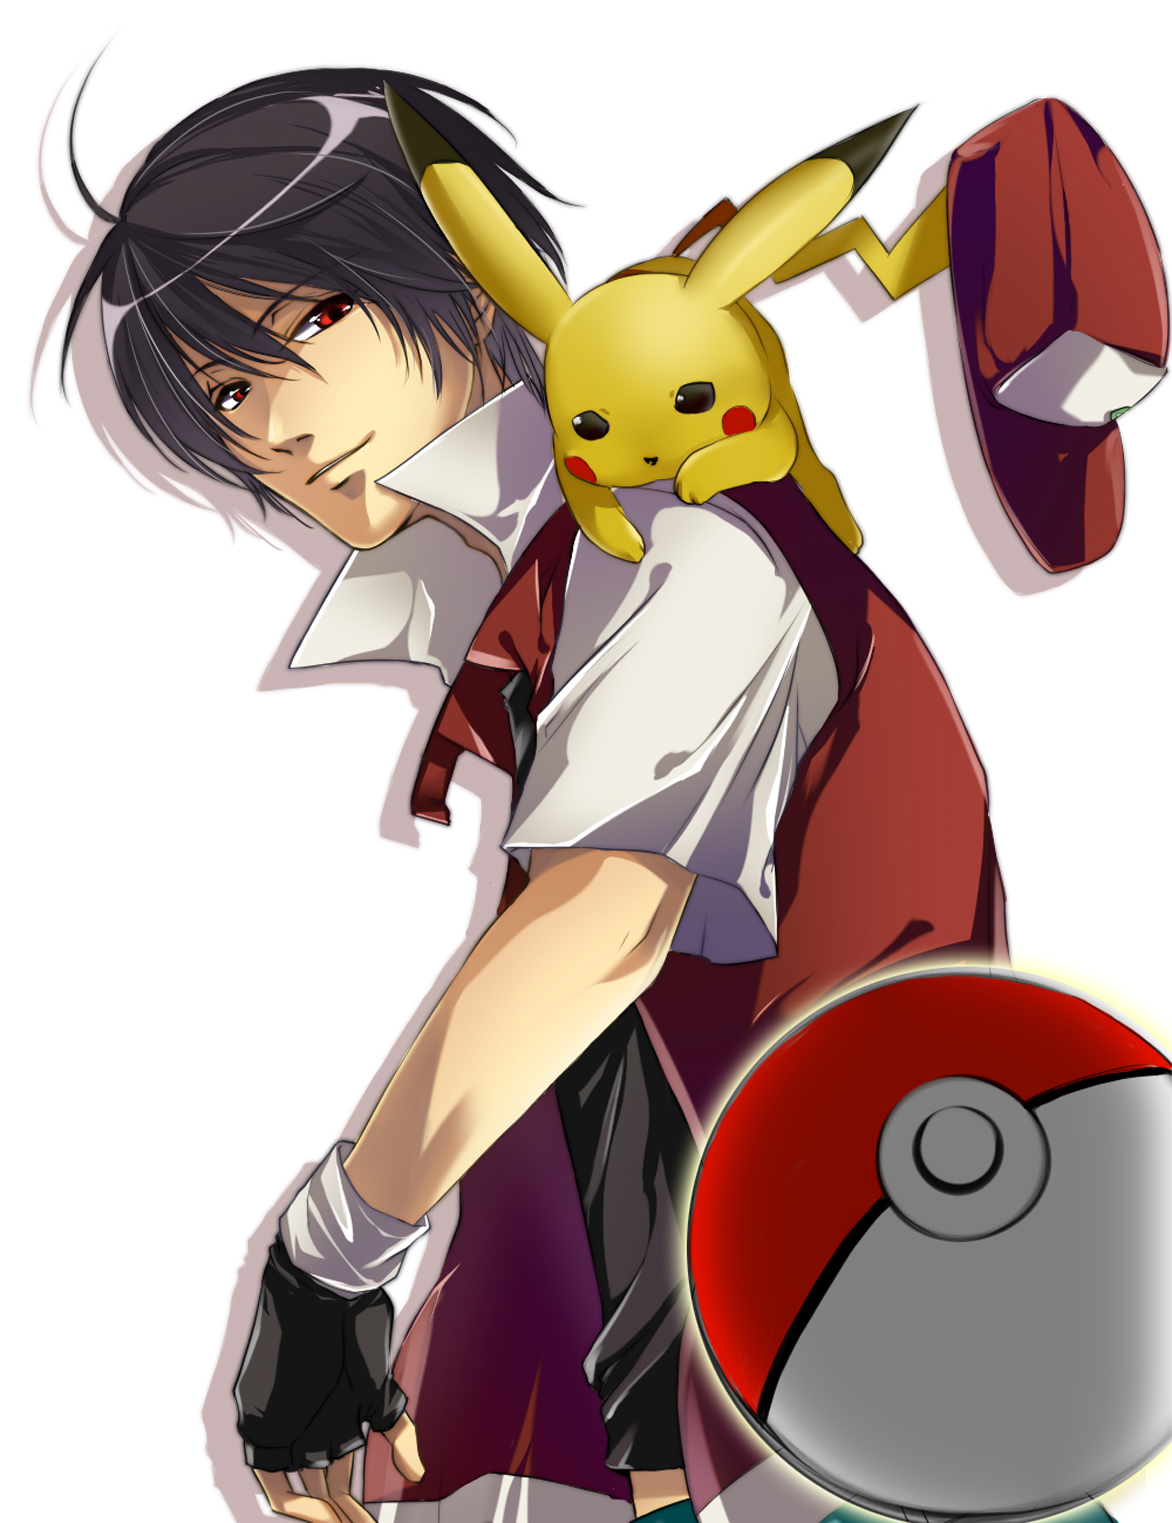 Pokemon Red - 1172x1523 Wallpaper 